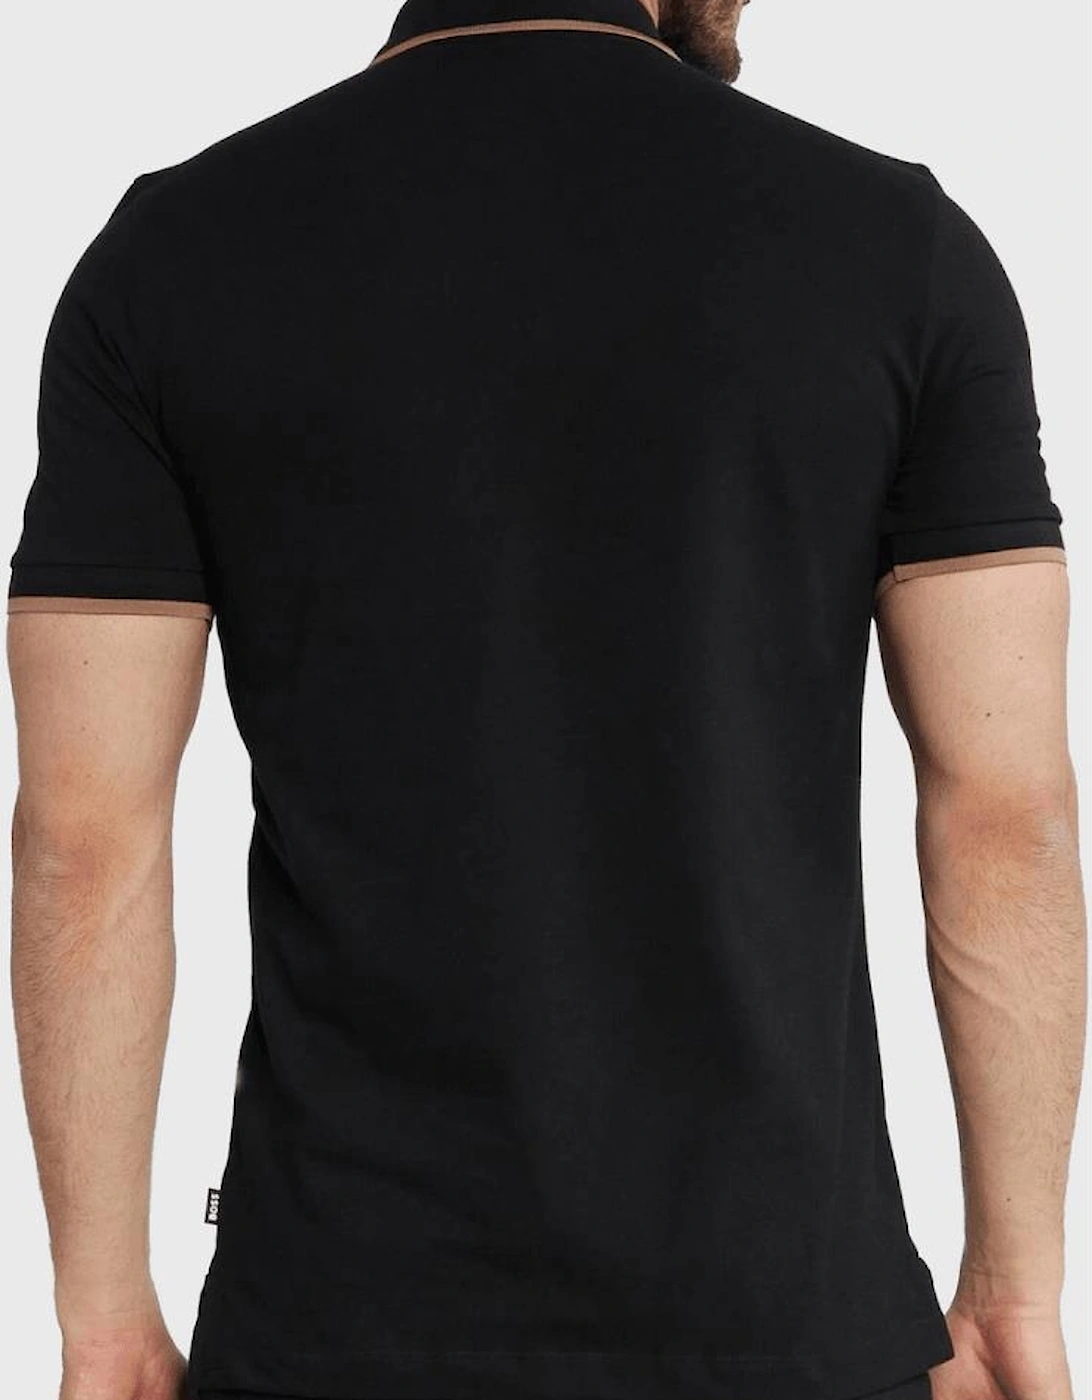 Parlay 190 Regular Fit Black Polo Shirt